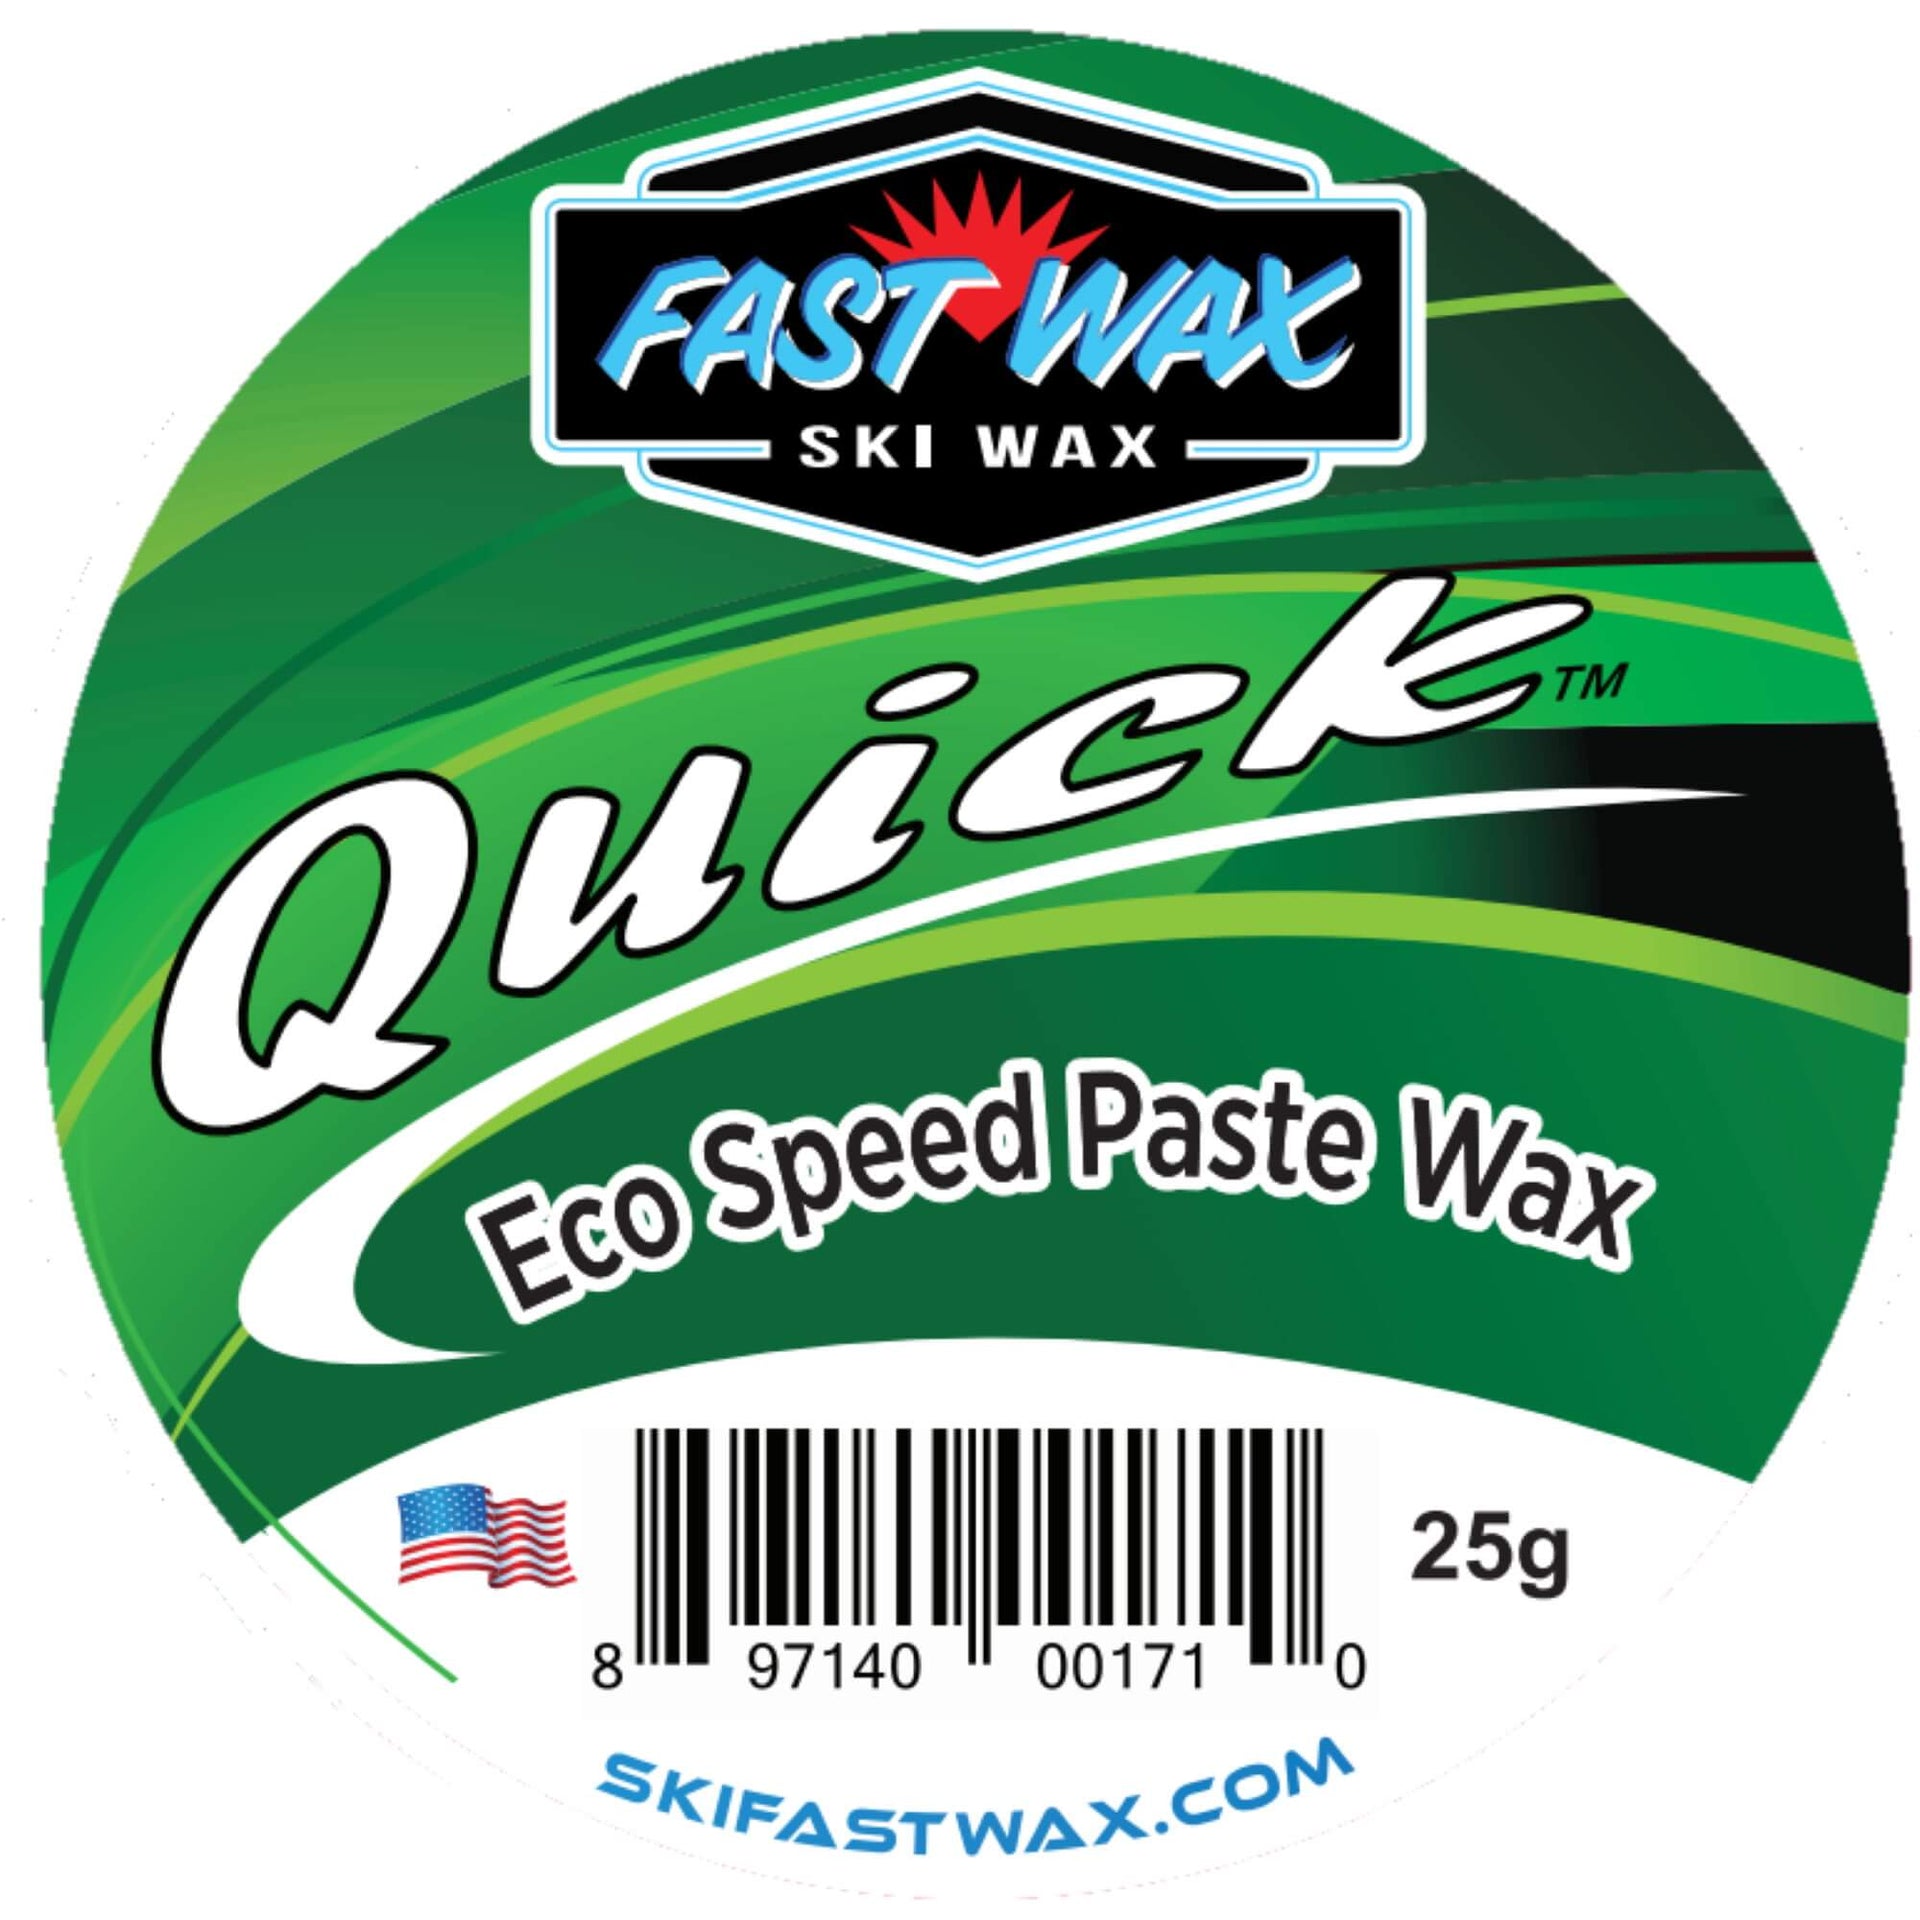 Fast Wax HSX Paste Wax 60g